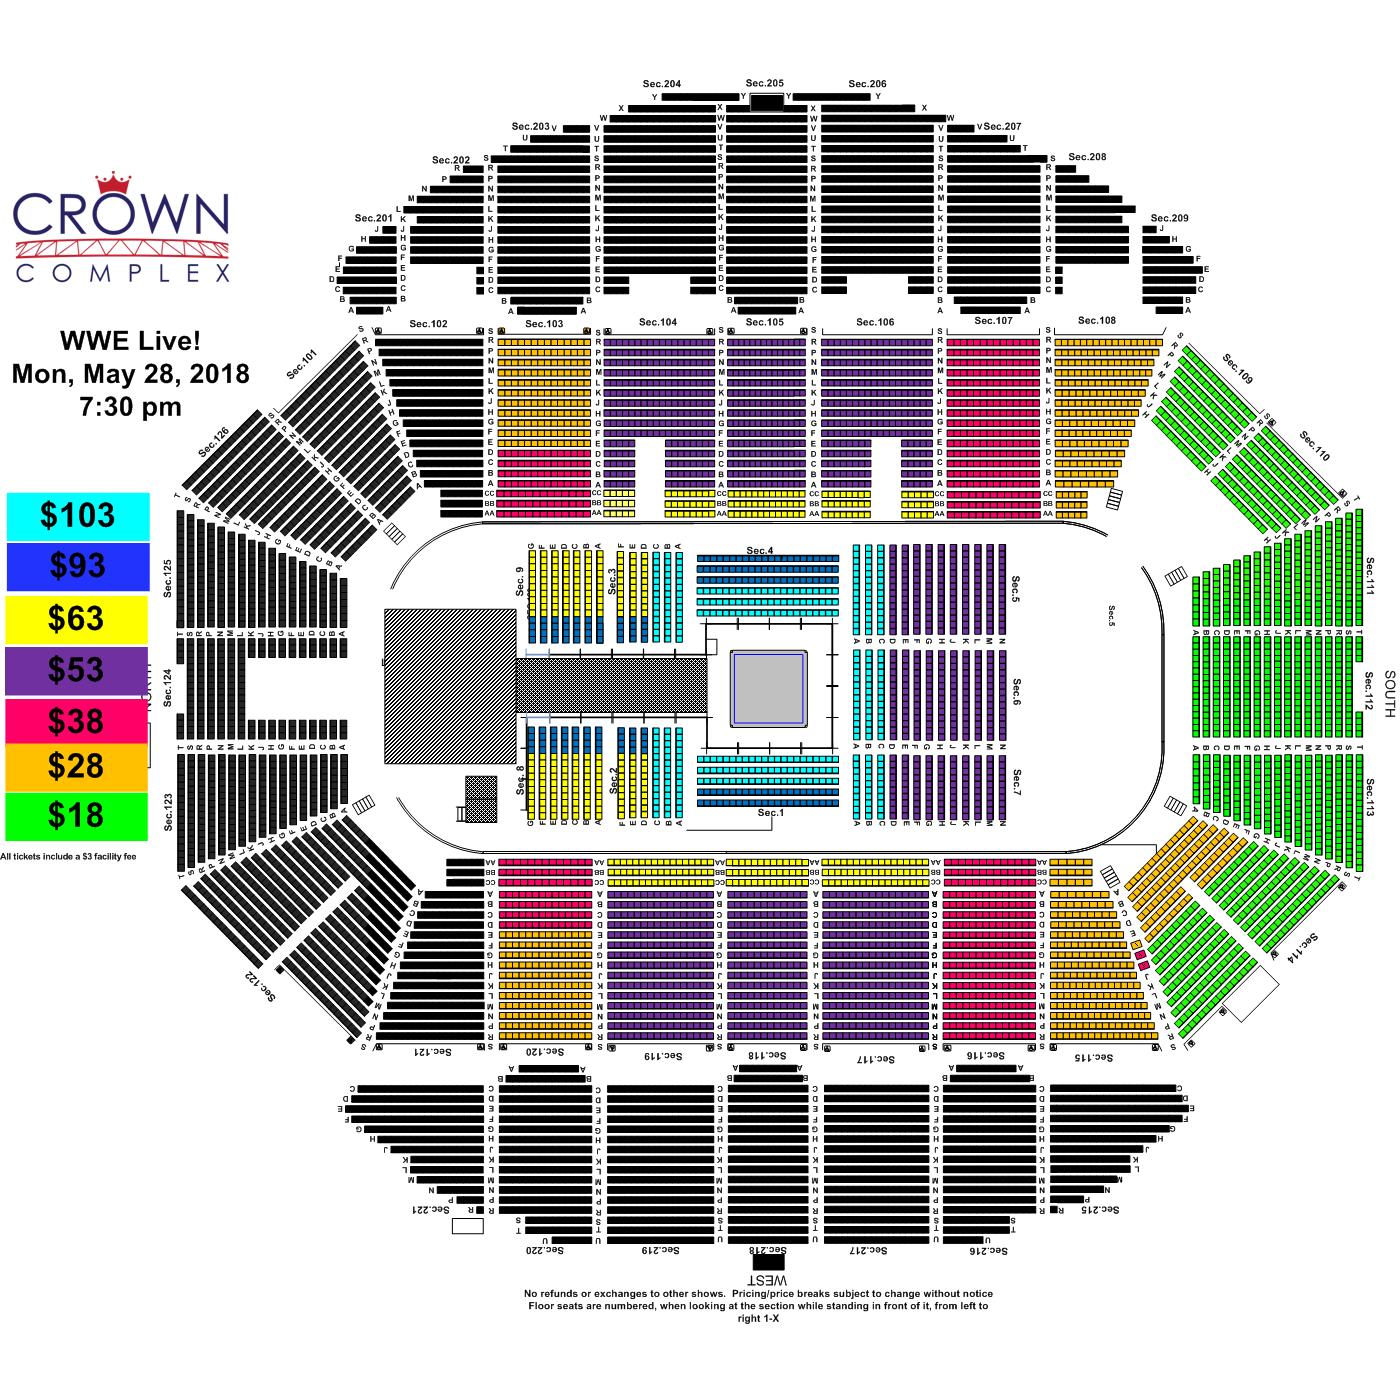 Crown Coliseum Seating Chart Shinedown